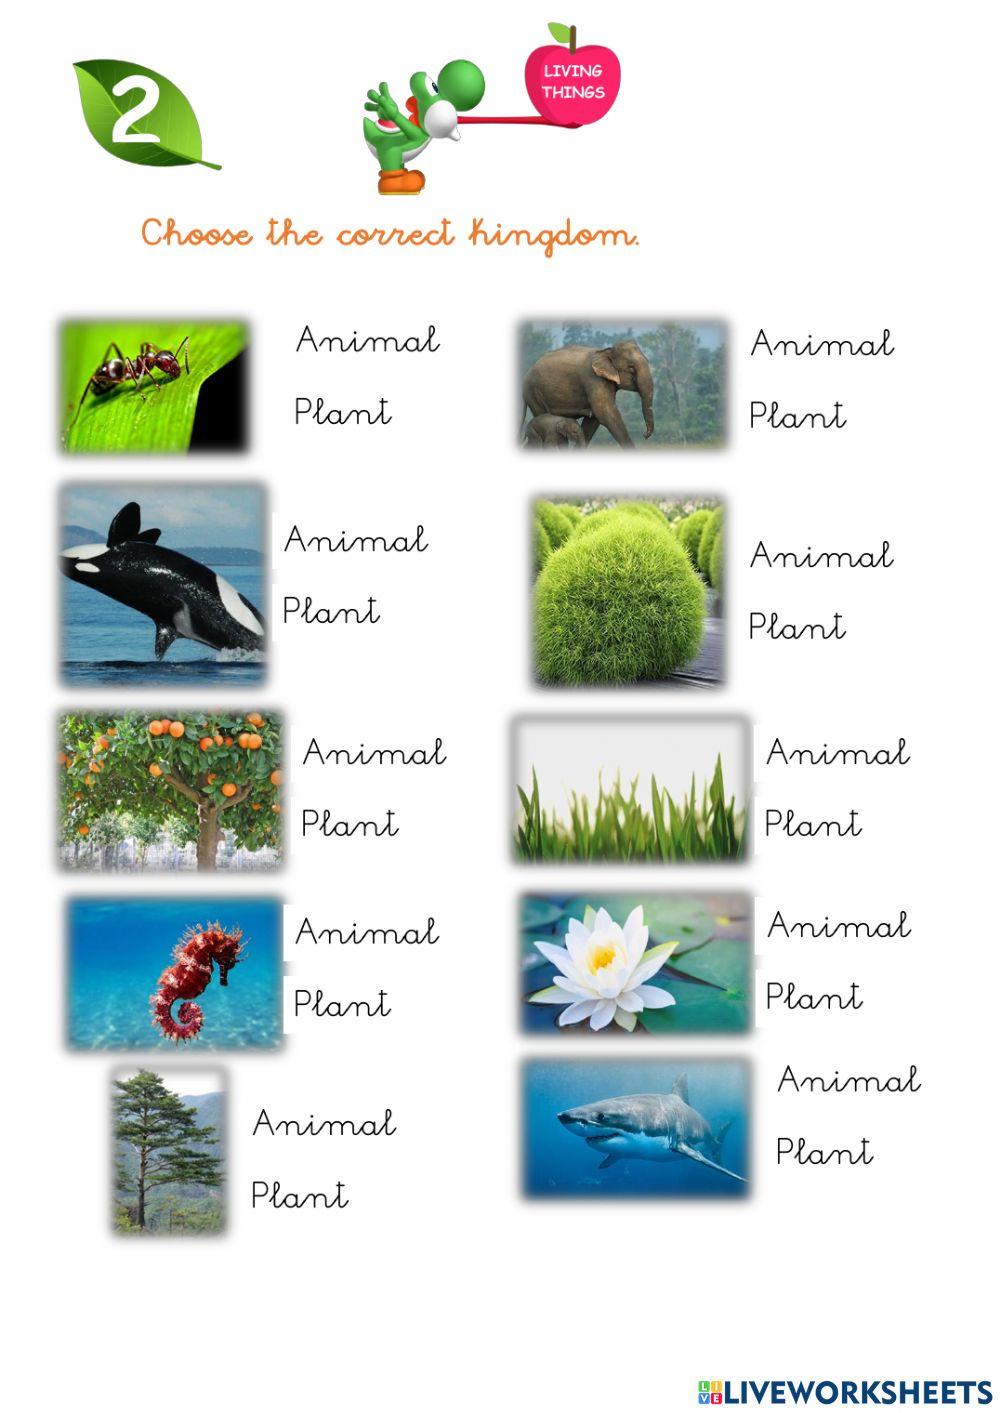 Animal or plant